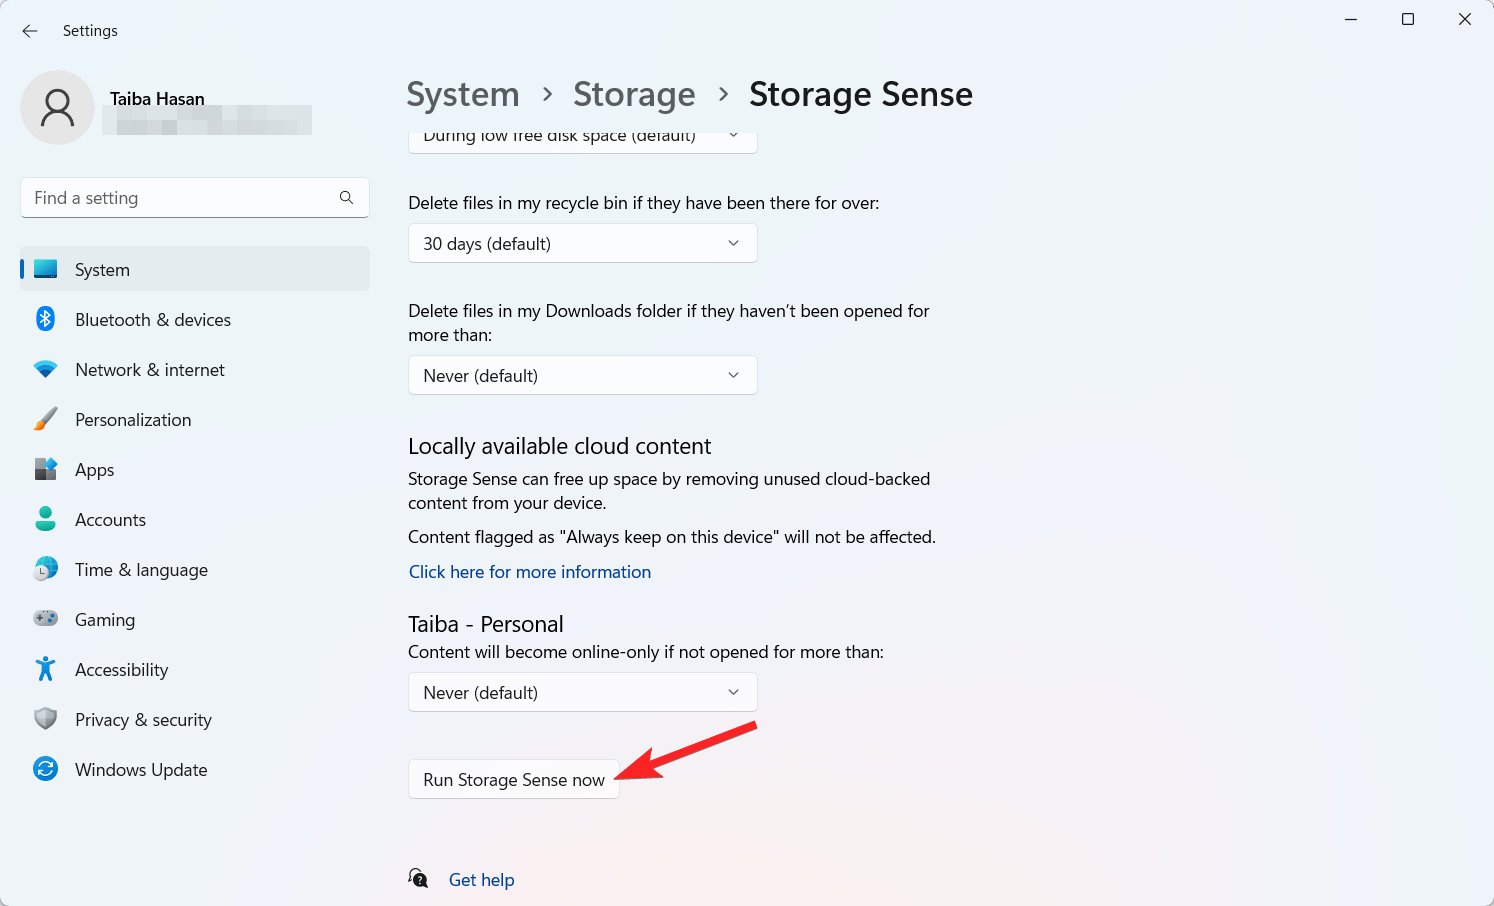 Scroll down and press the Run storage sense now button